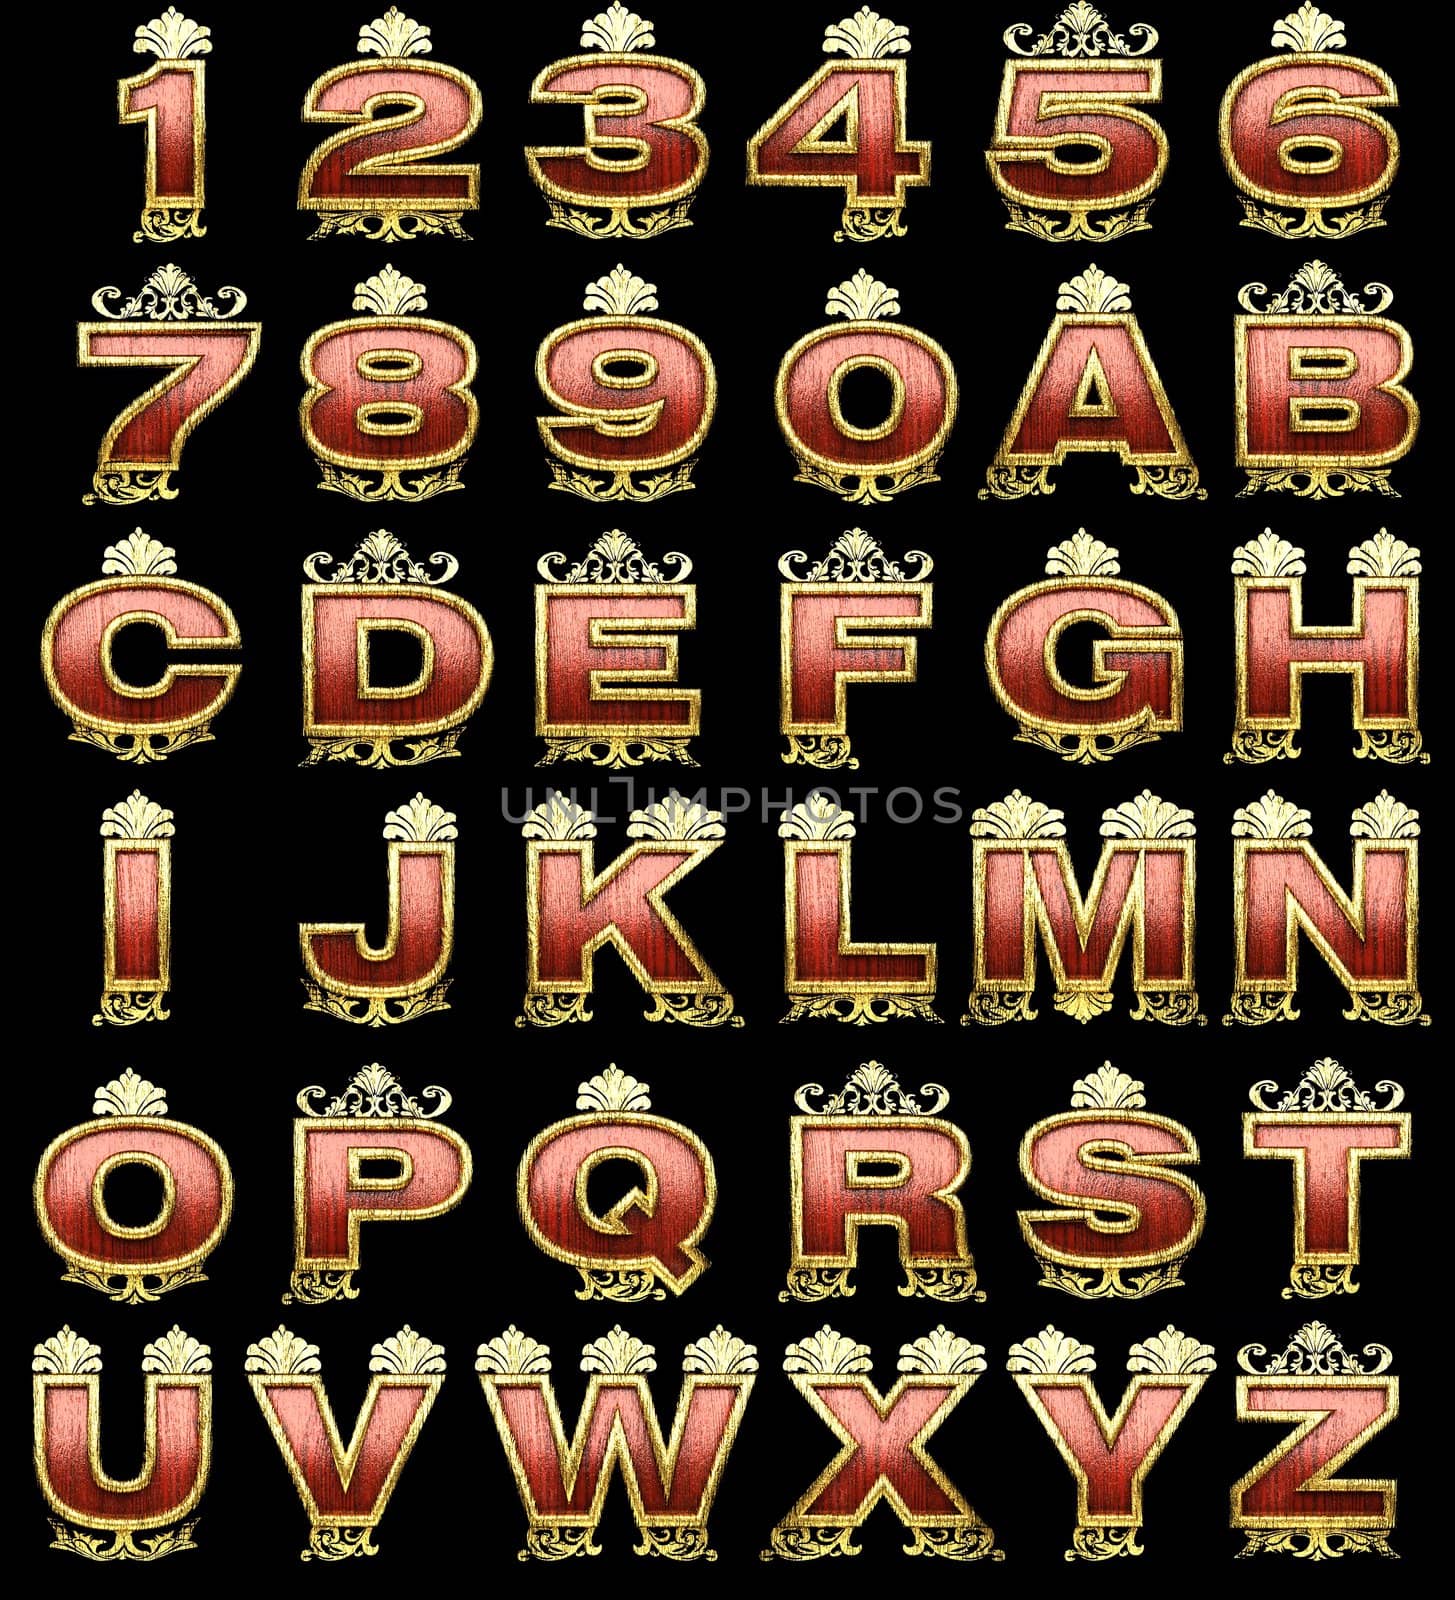 golden alphabet set